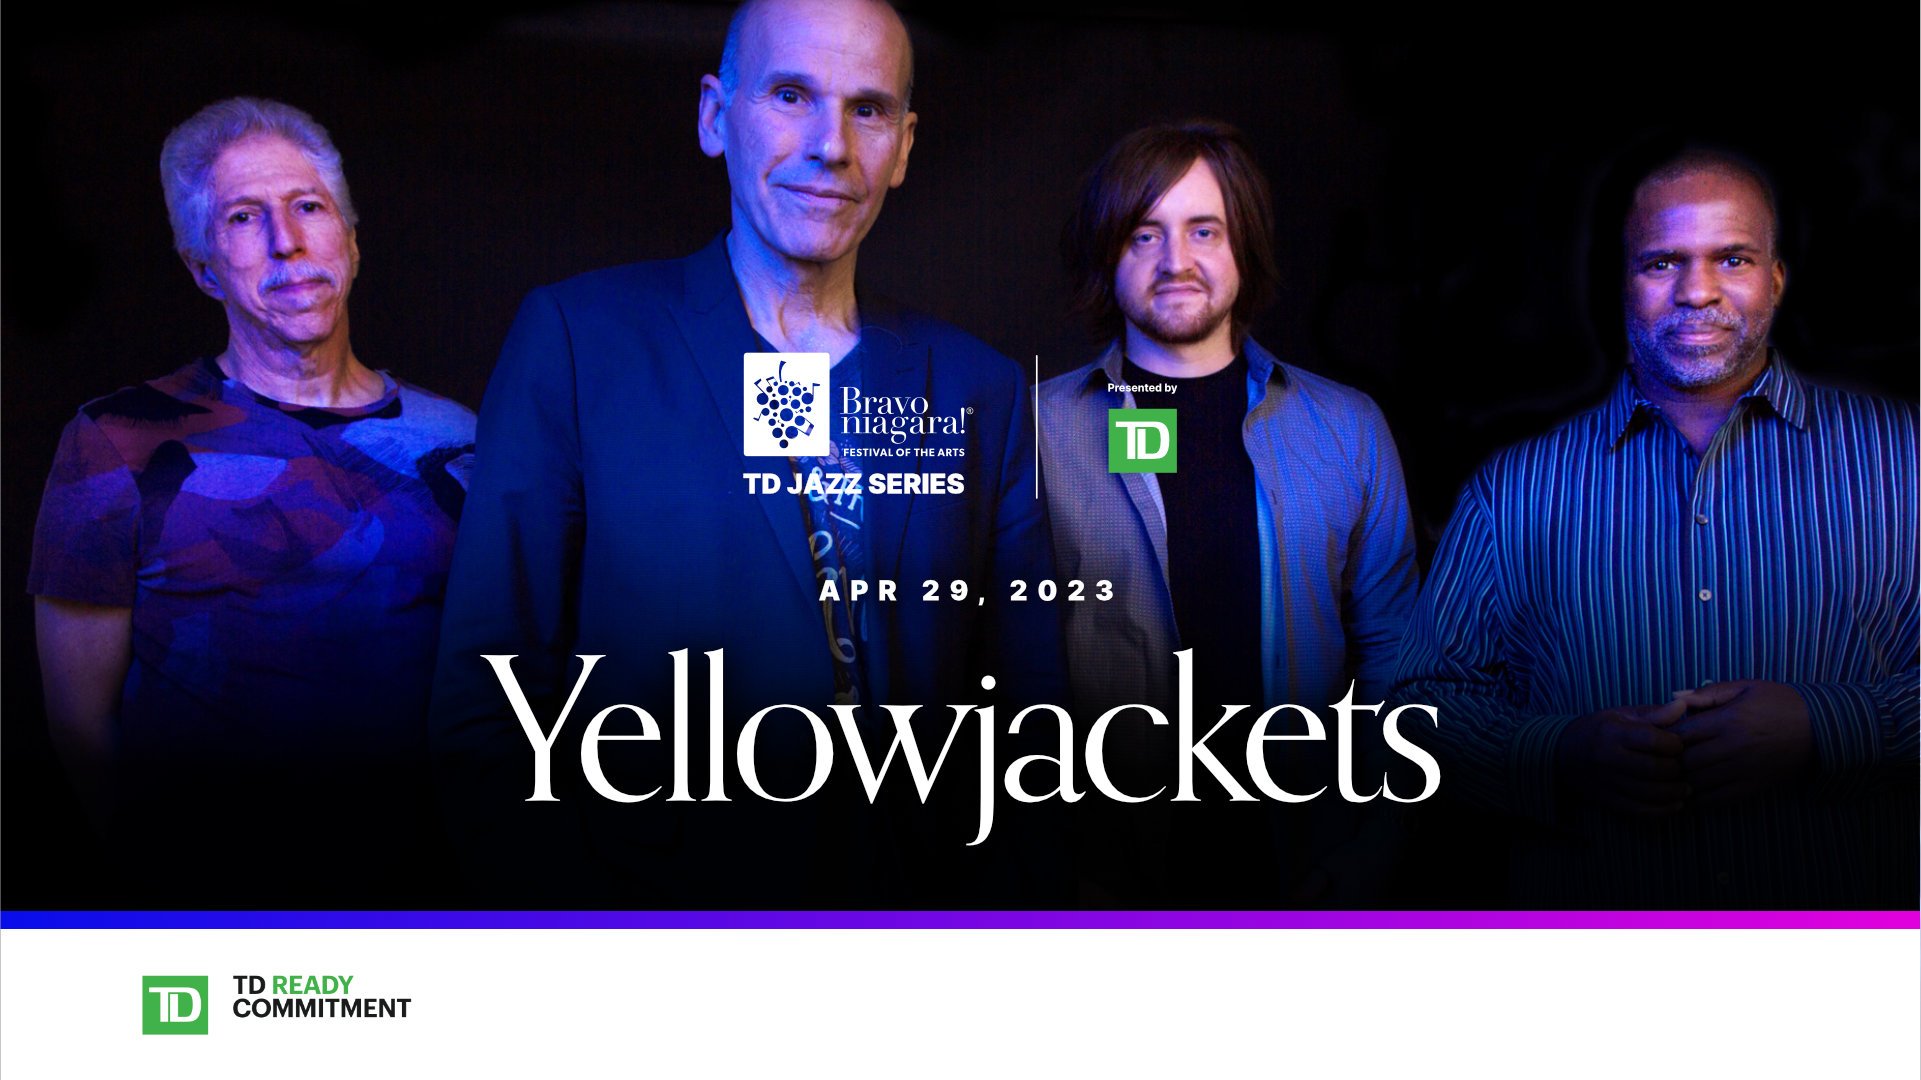 Yellowjackets presented by Bravo! Niagara